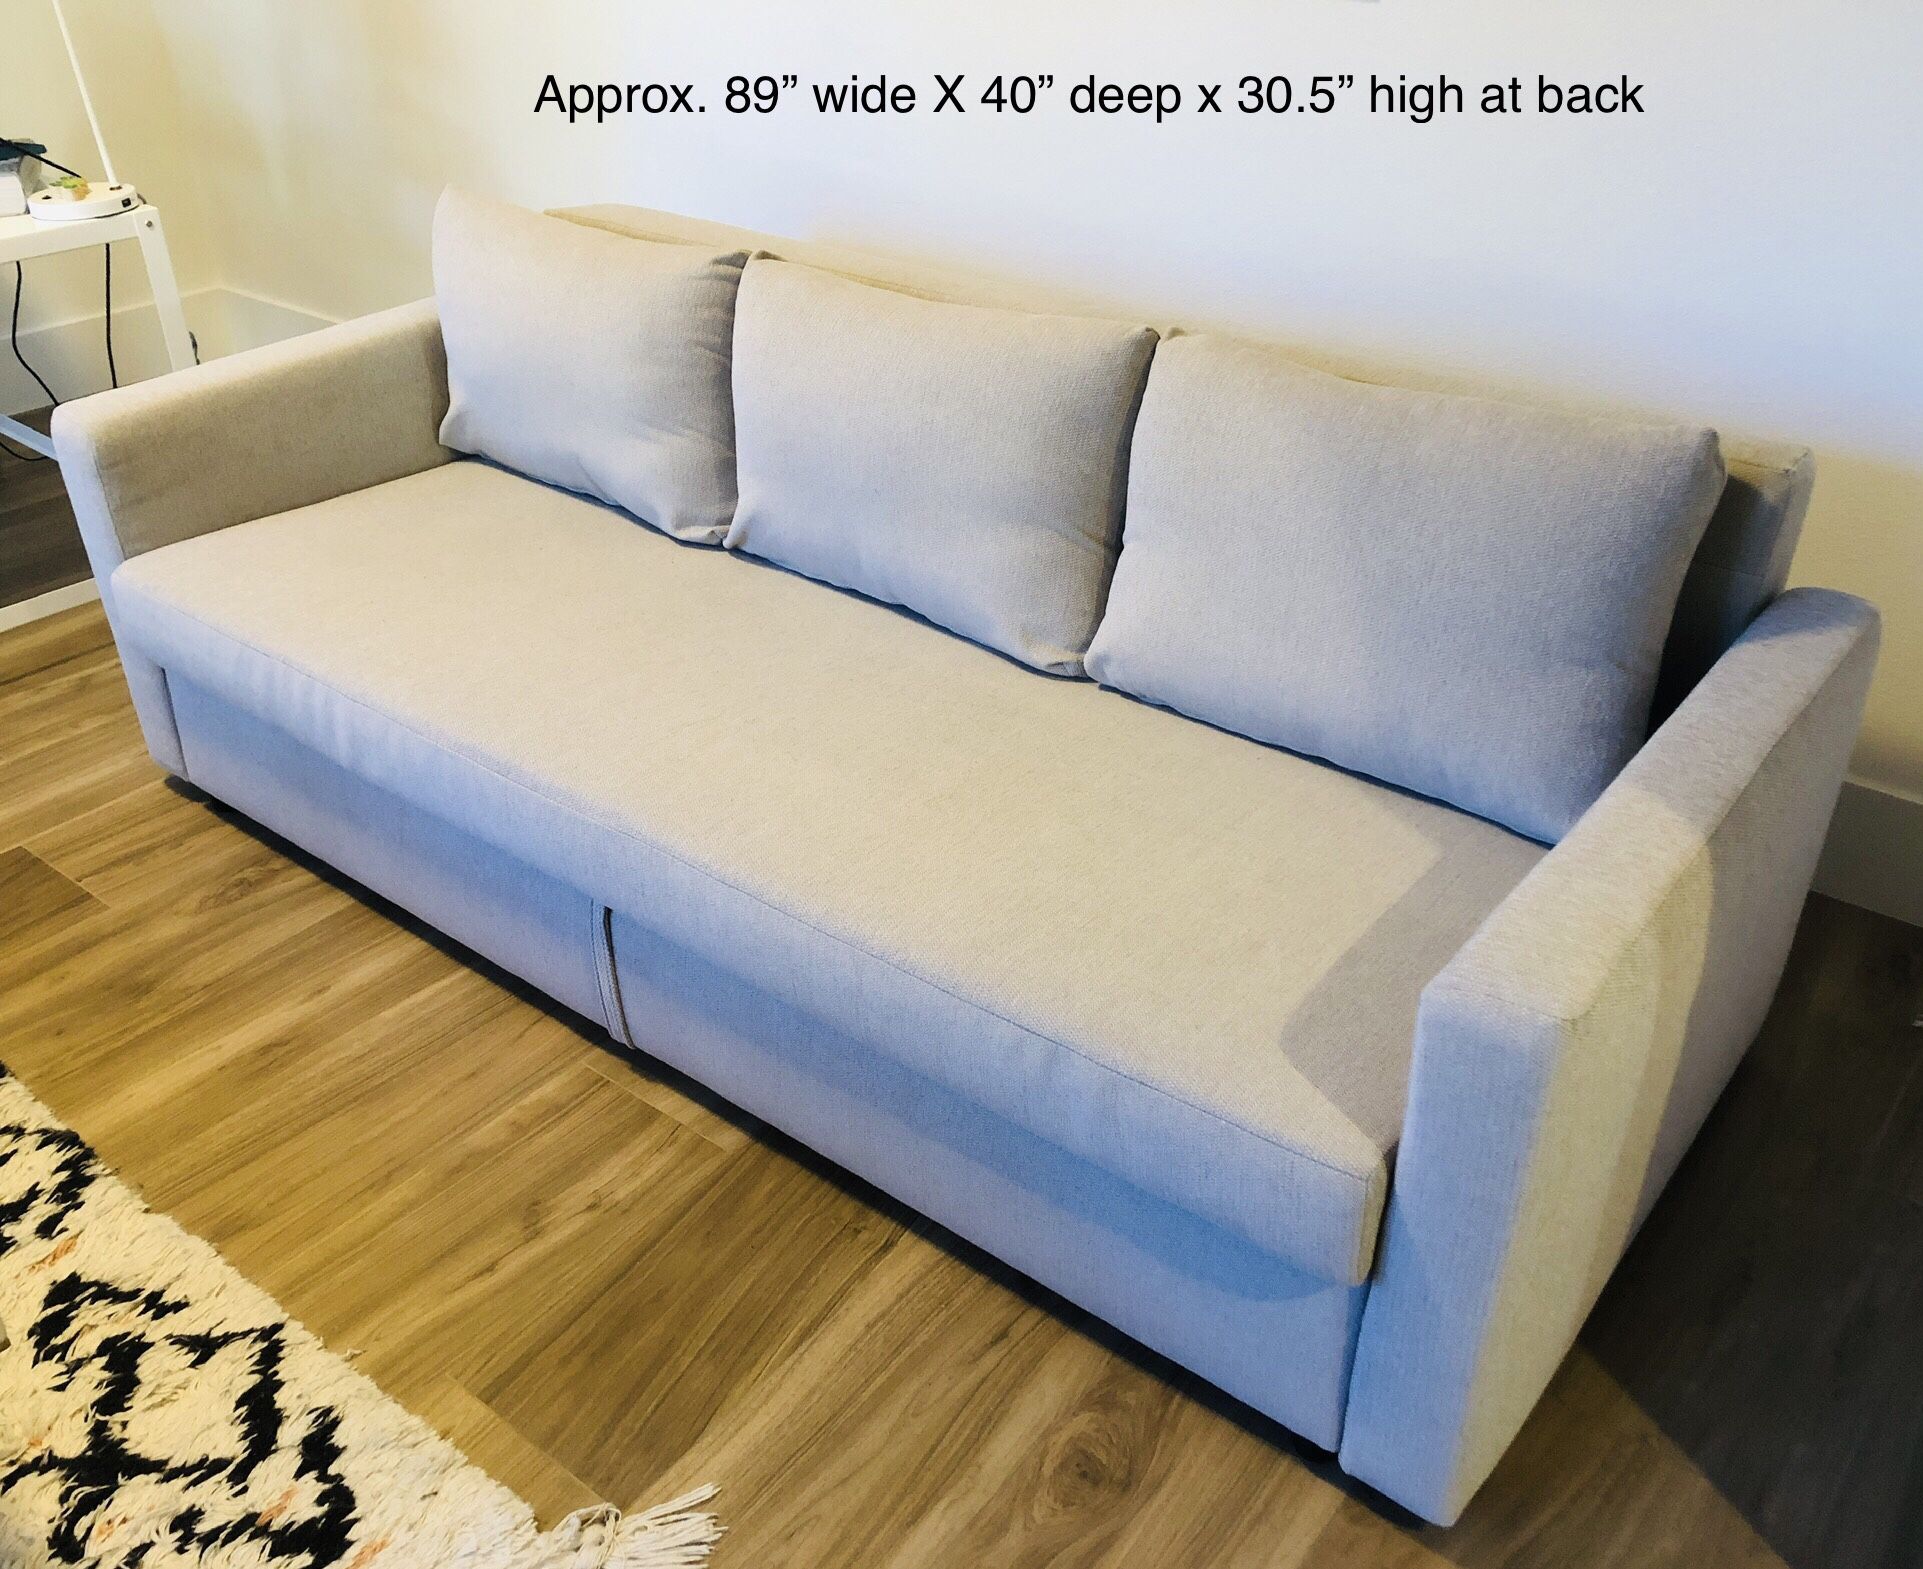 Sofa / Sleeper Sofa - Like New